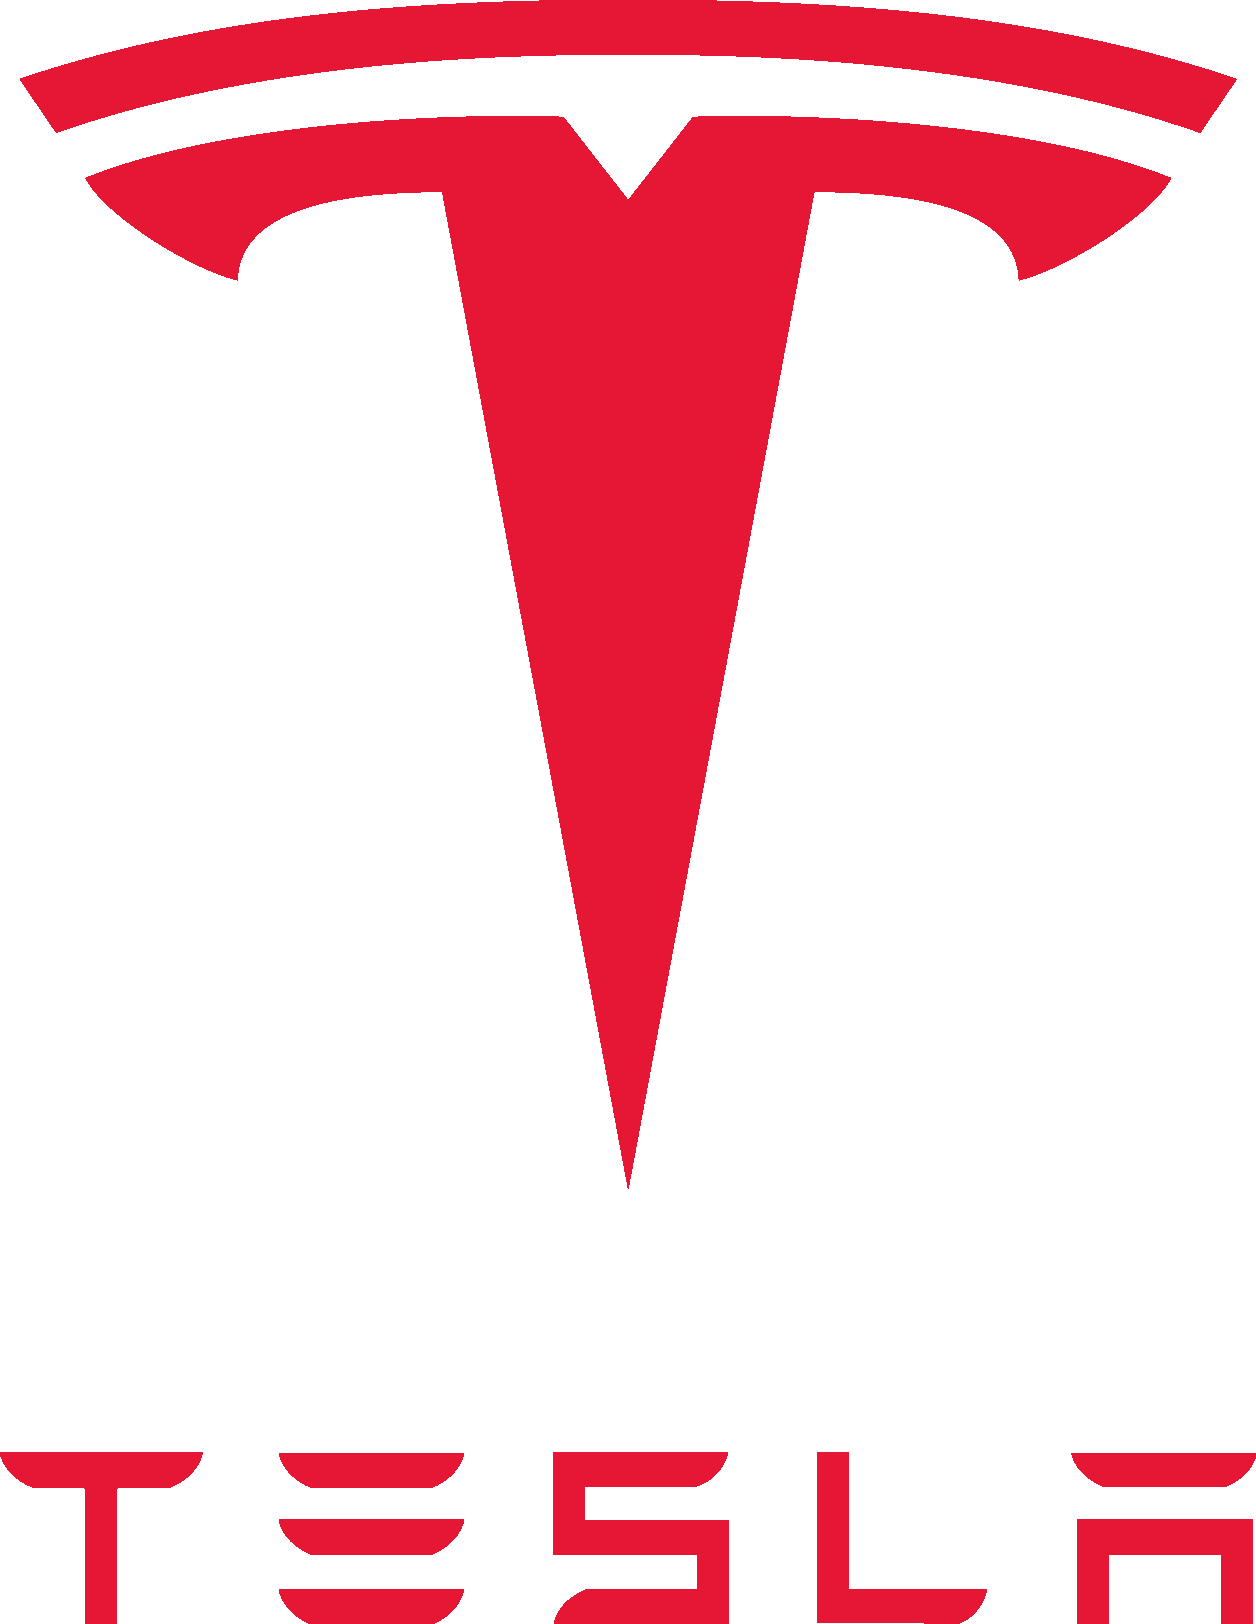 Smart Car, Electric Scooter, Hybrid Cars, Electric - Tesla Motors Logo (1256x1624)